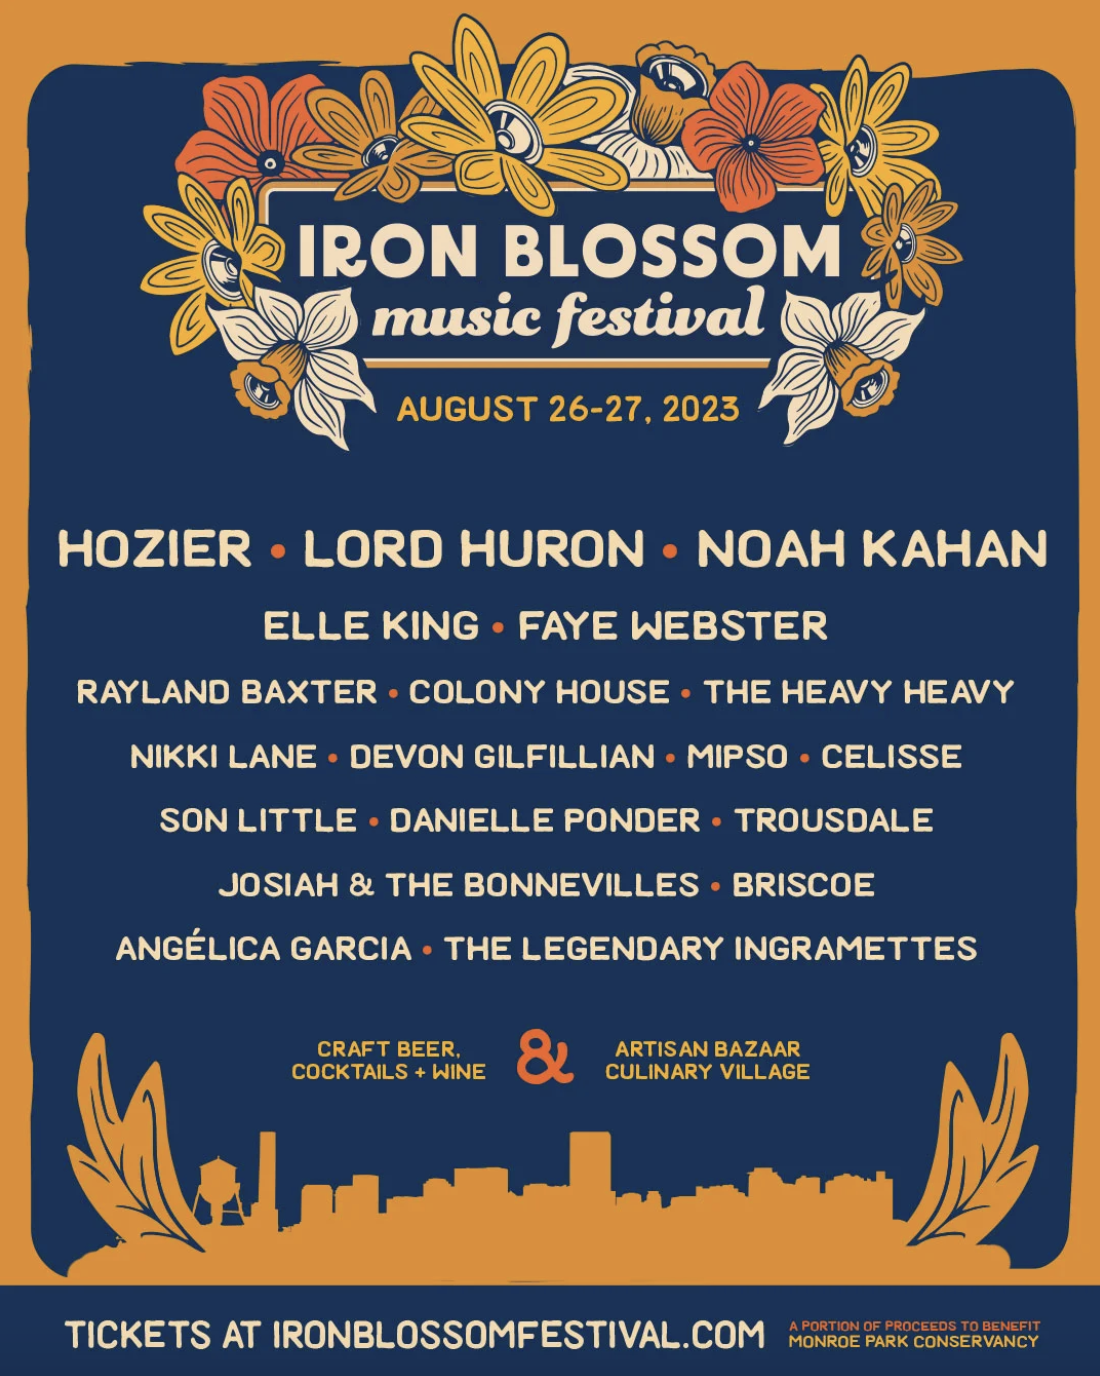 Hozier to Headline Iron Blossom Festival • Music Daily